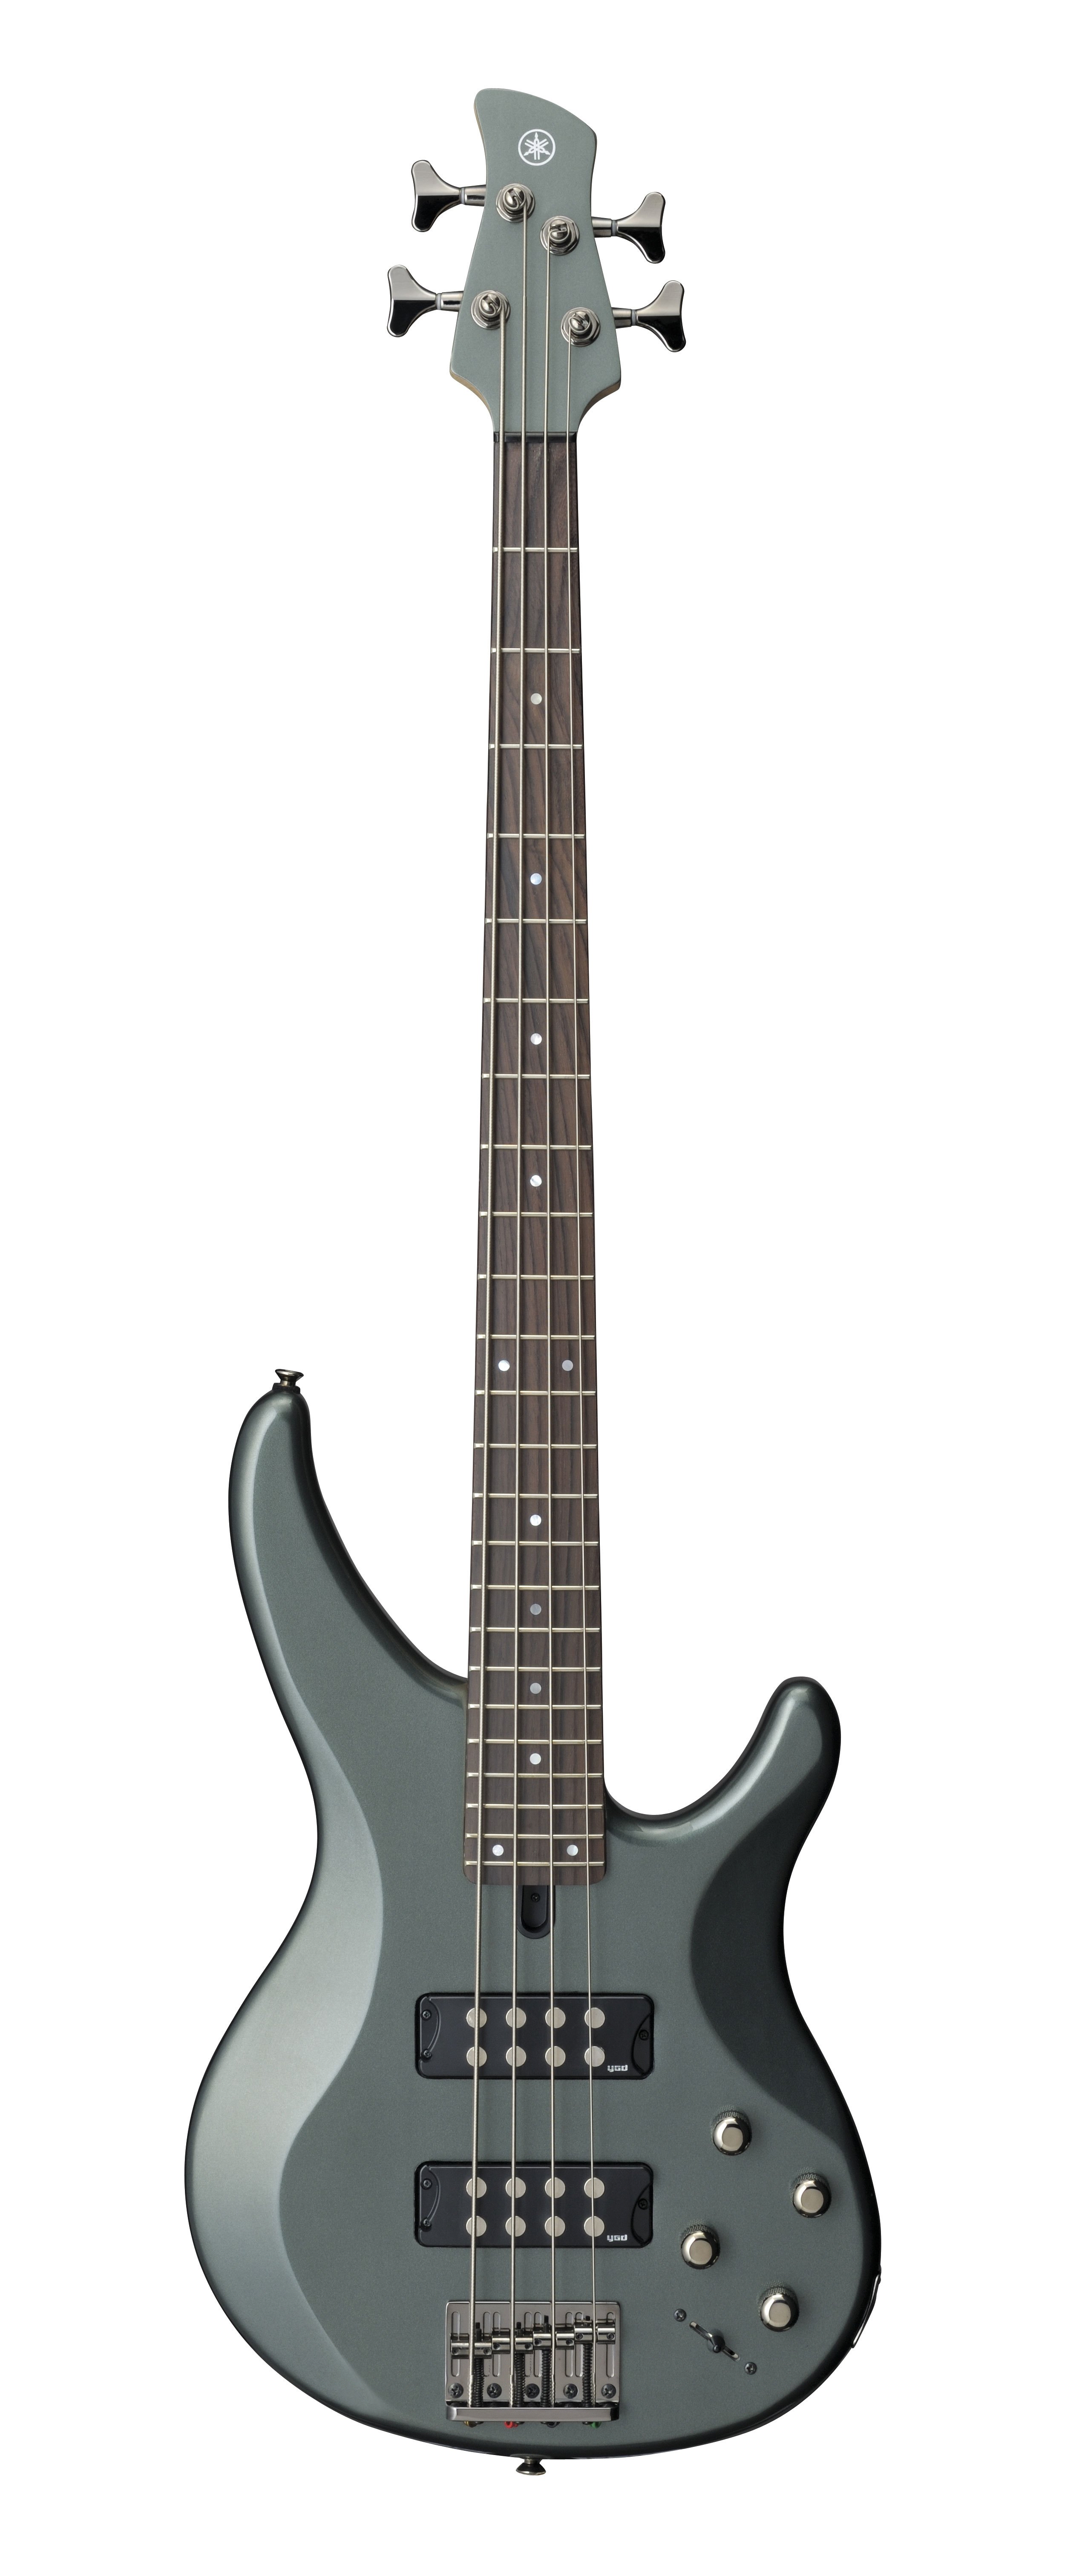 TRBX - 300 Series - Electric Basses - Guitars, Basses, & Amps 